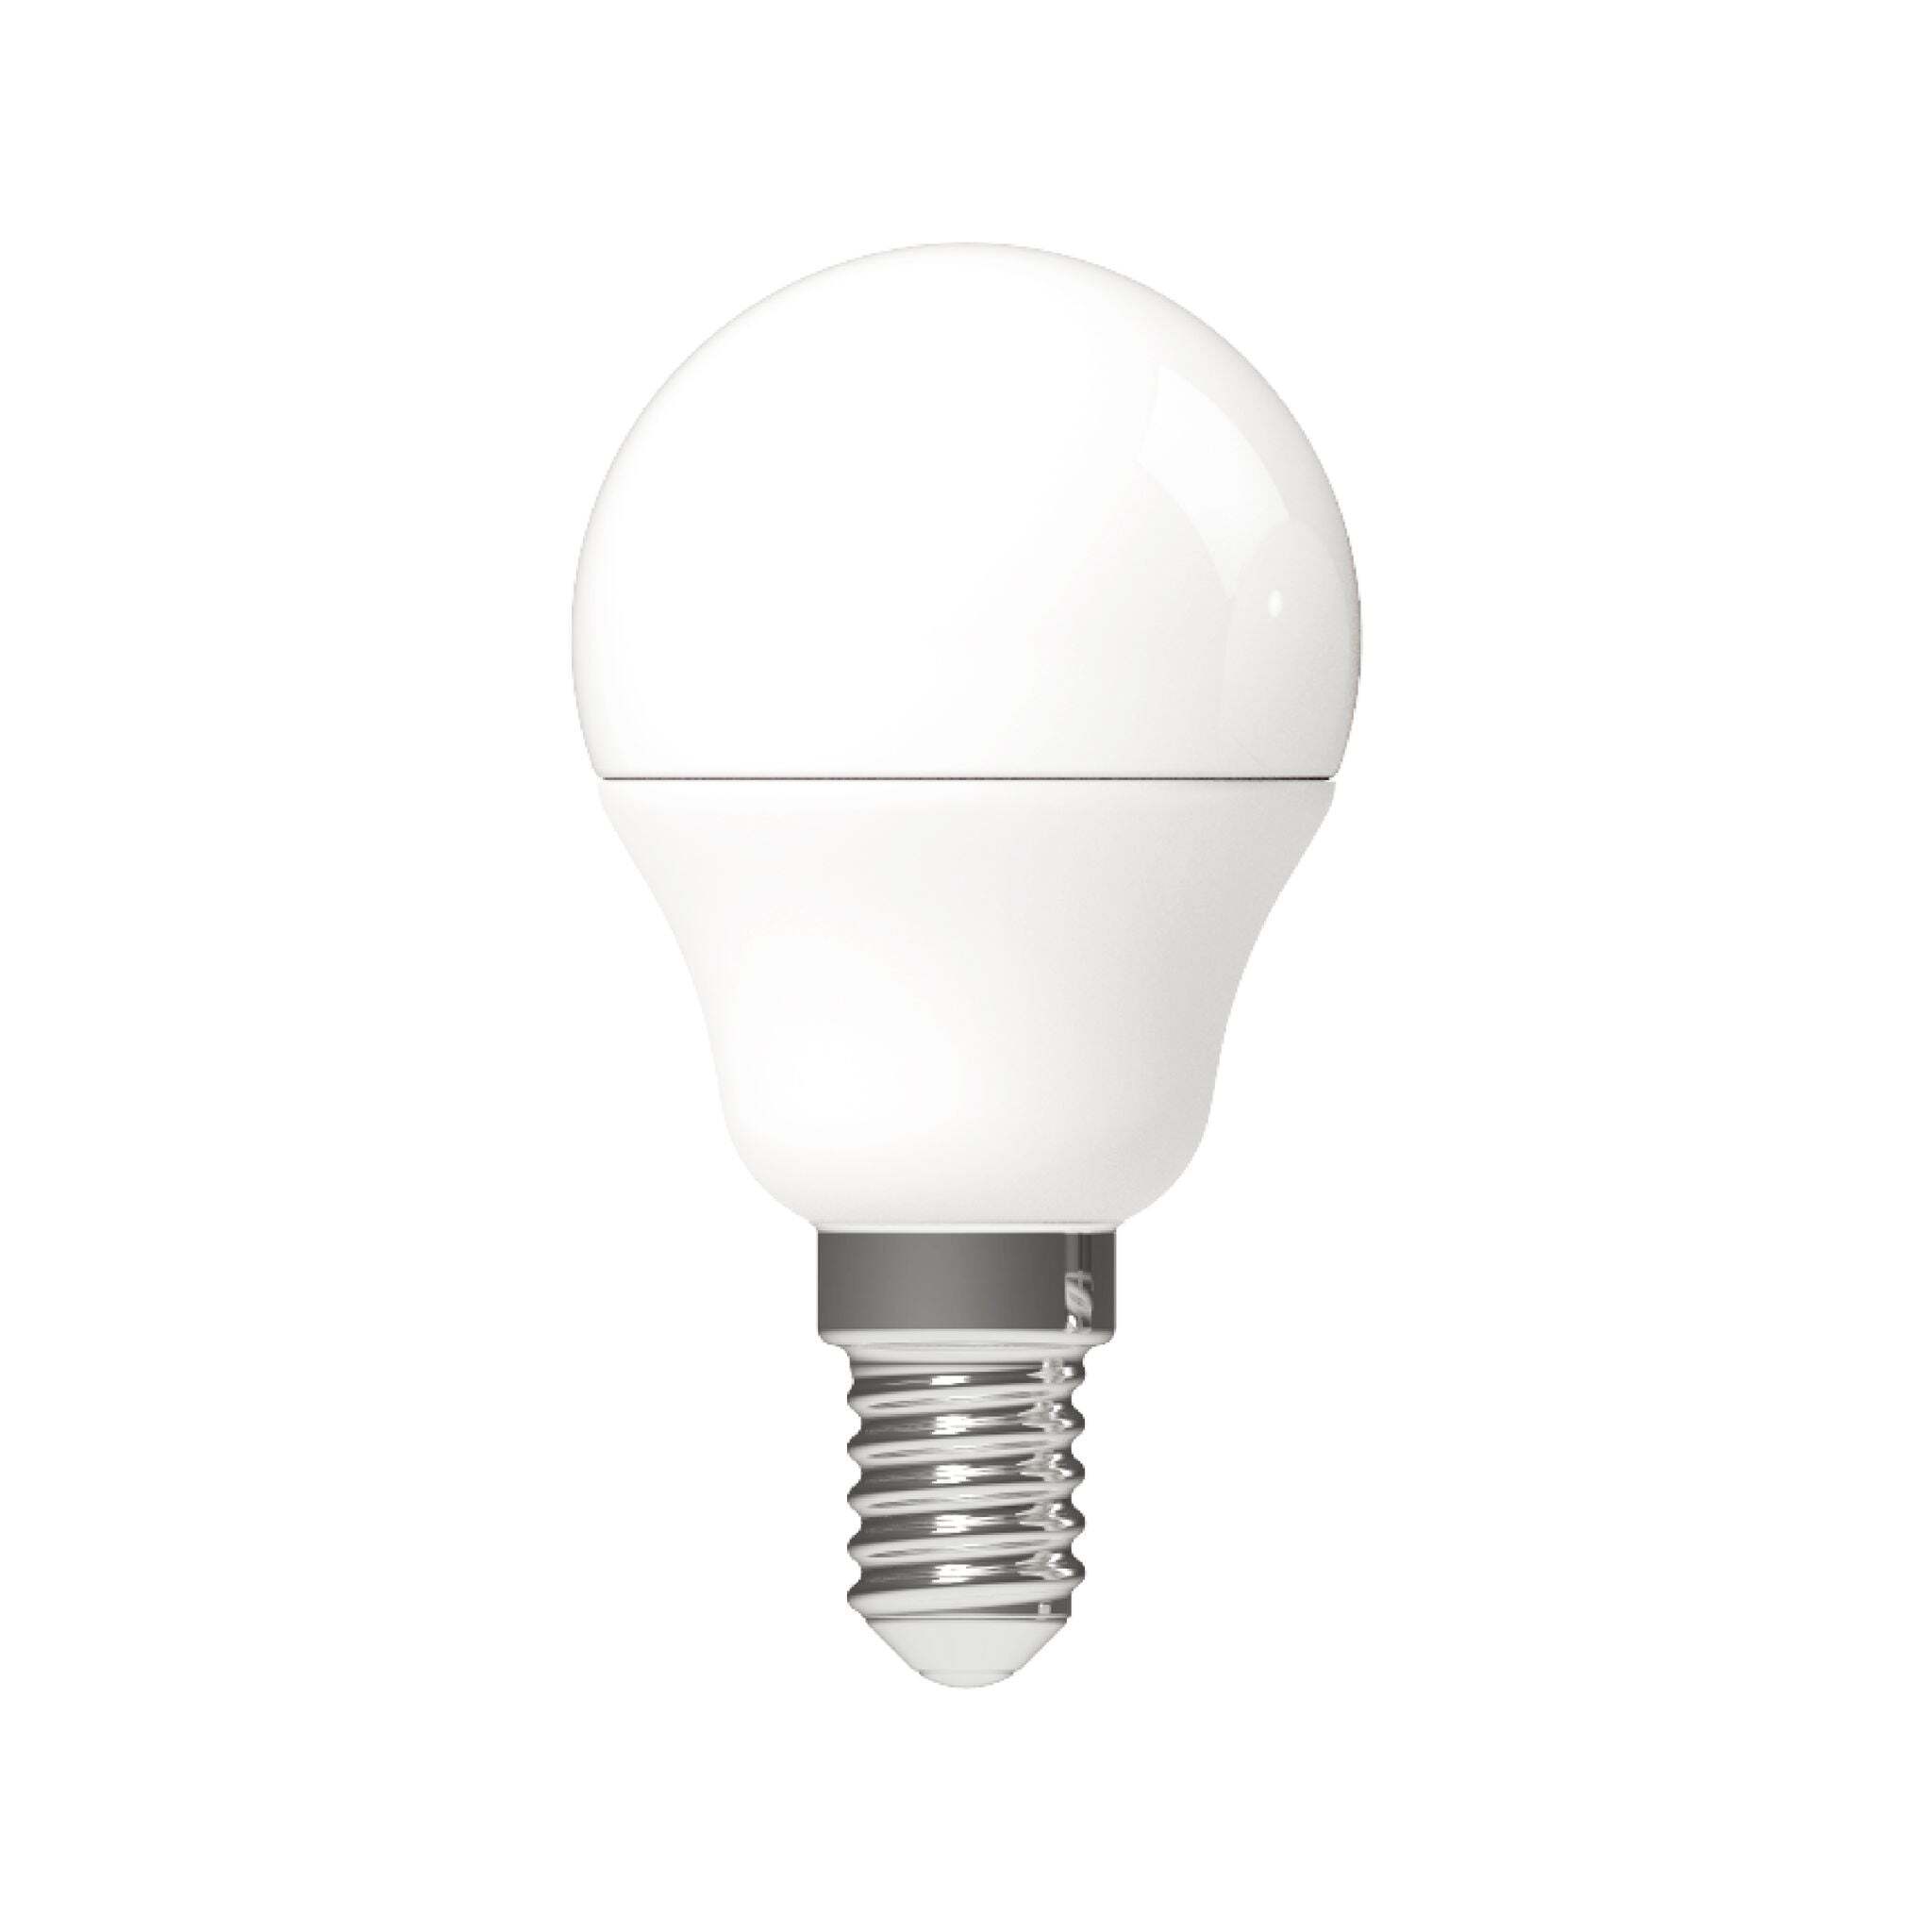 LED.nl LED E14 Lamp rond - 250 lm - Warm wit licht - 1 lamp